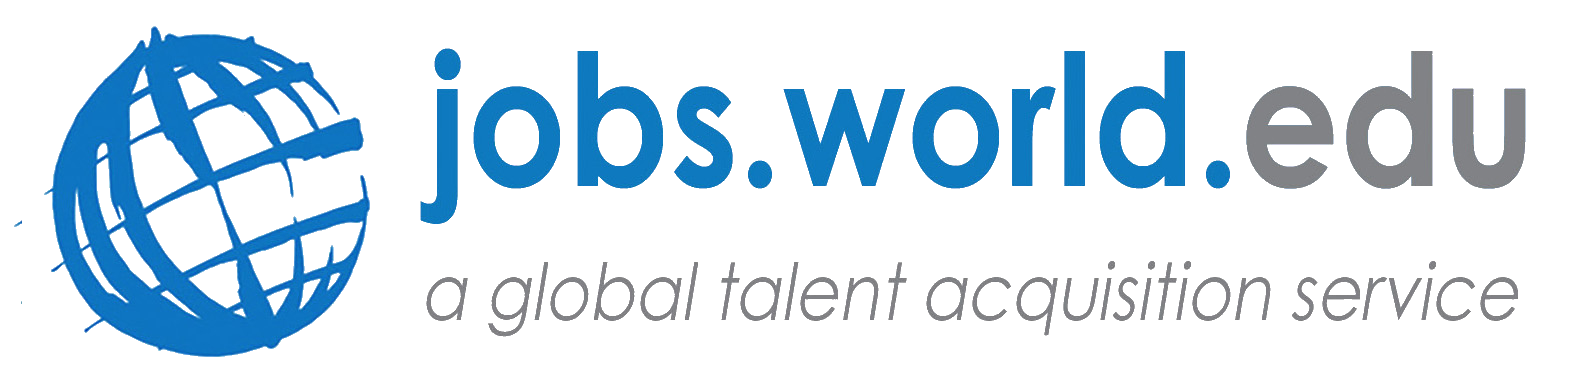 jobs.world.edu